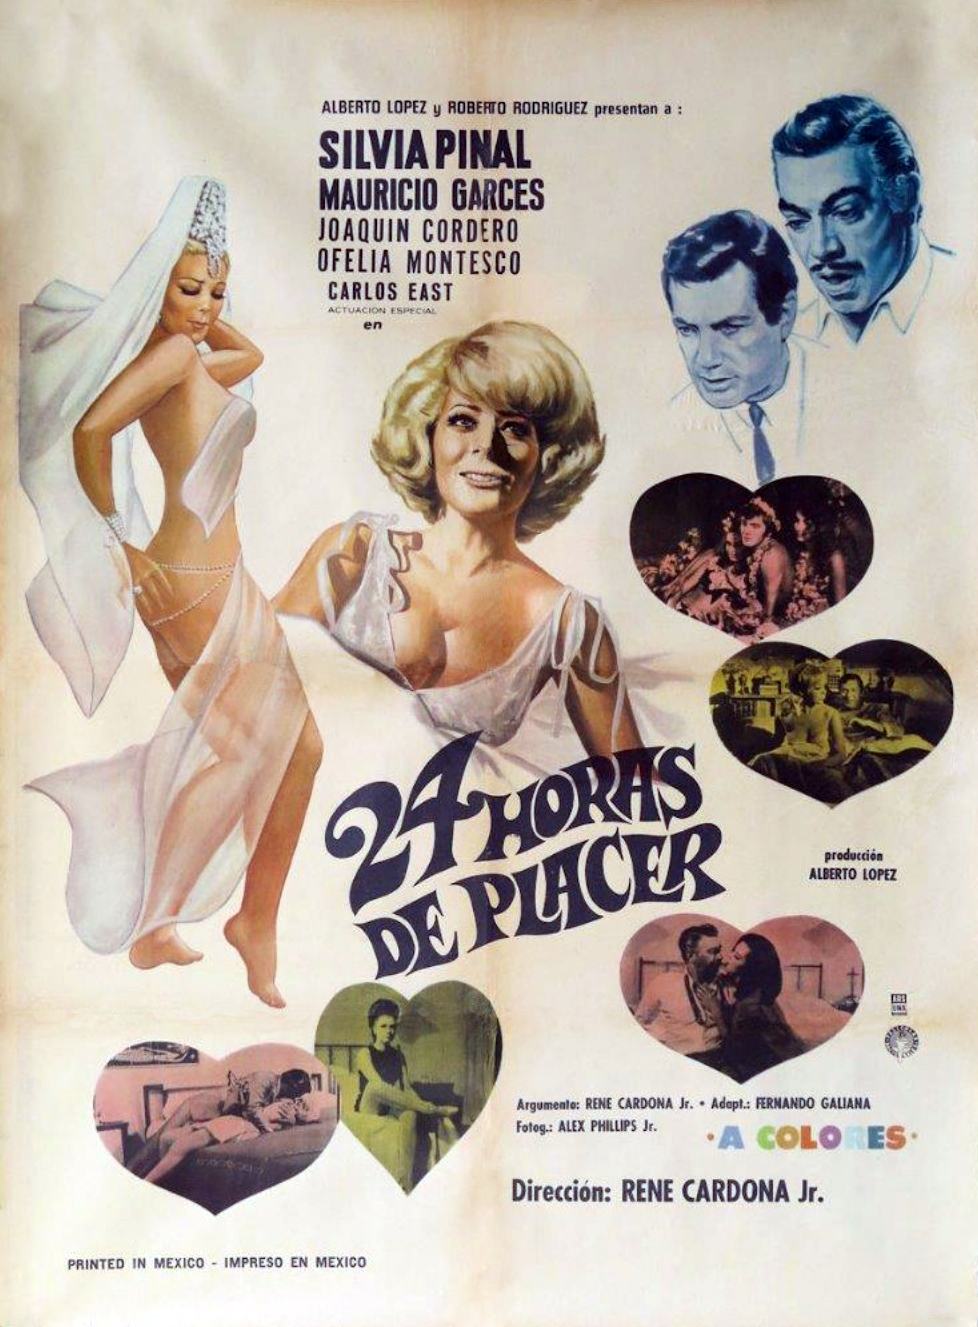 Twenty-Four Hours of Pleasure (1969) Screenshot 1